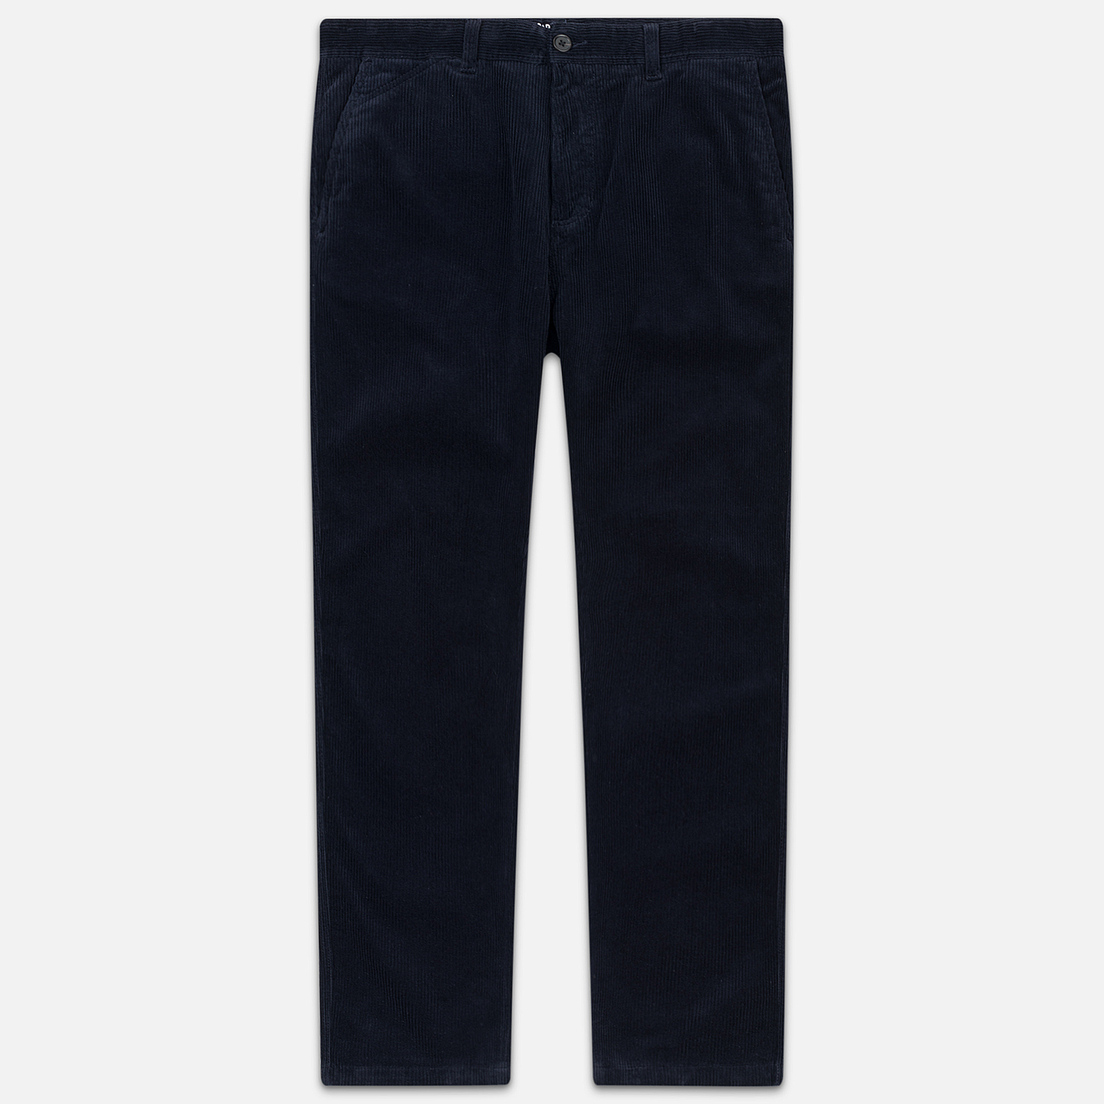 Carhartt WIP Мужские брюки Menson 9.7 Oz